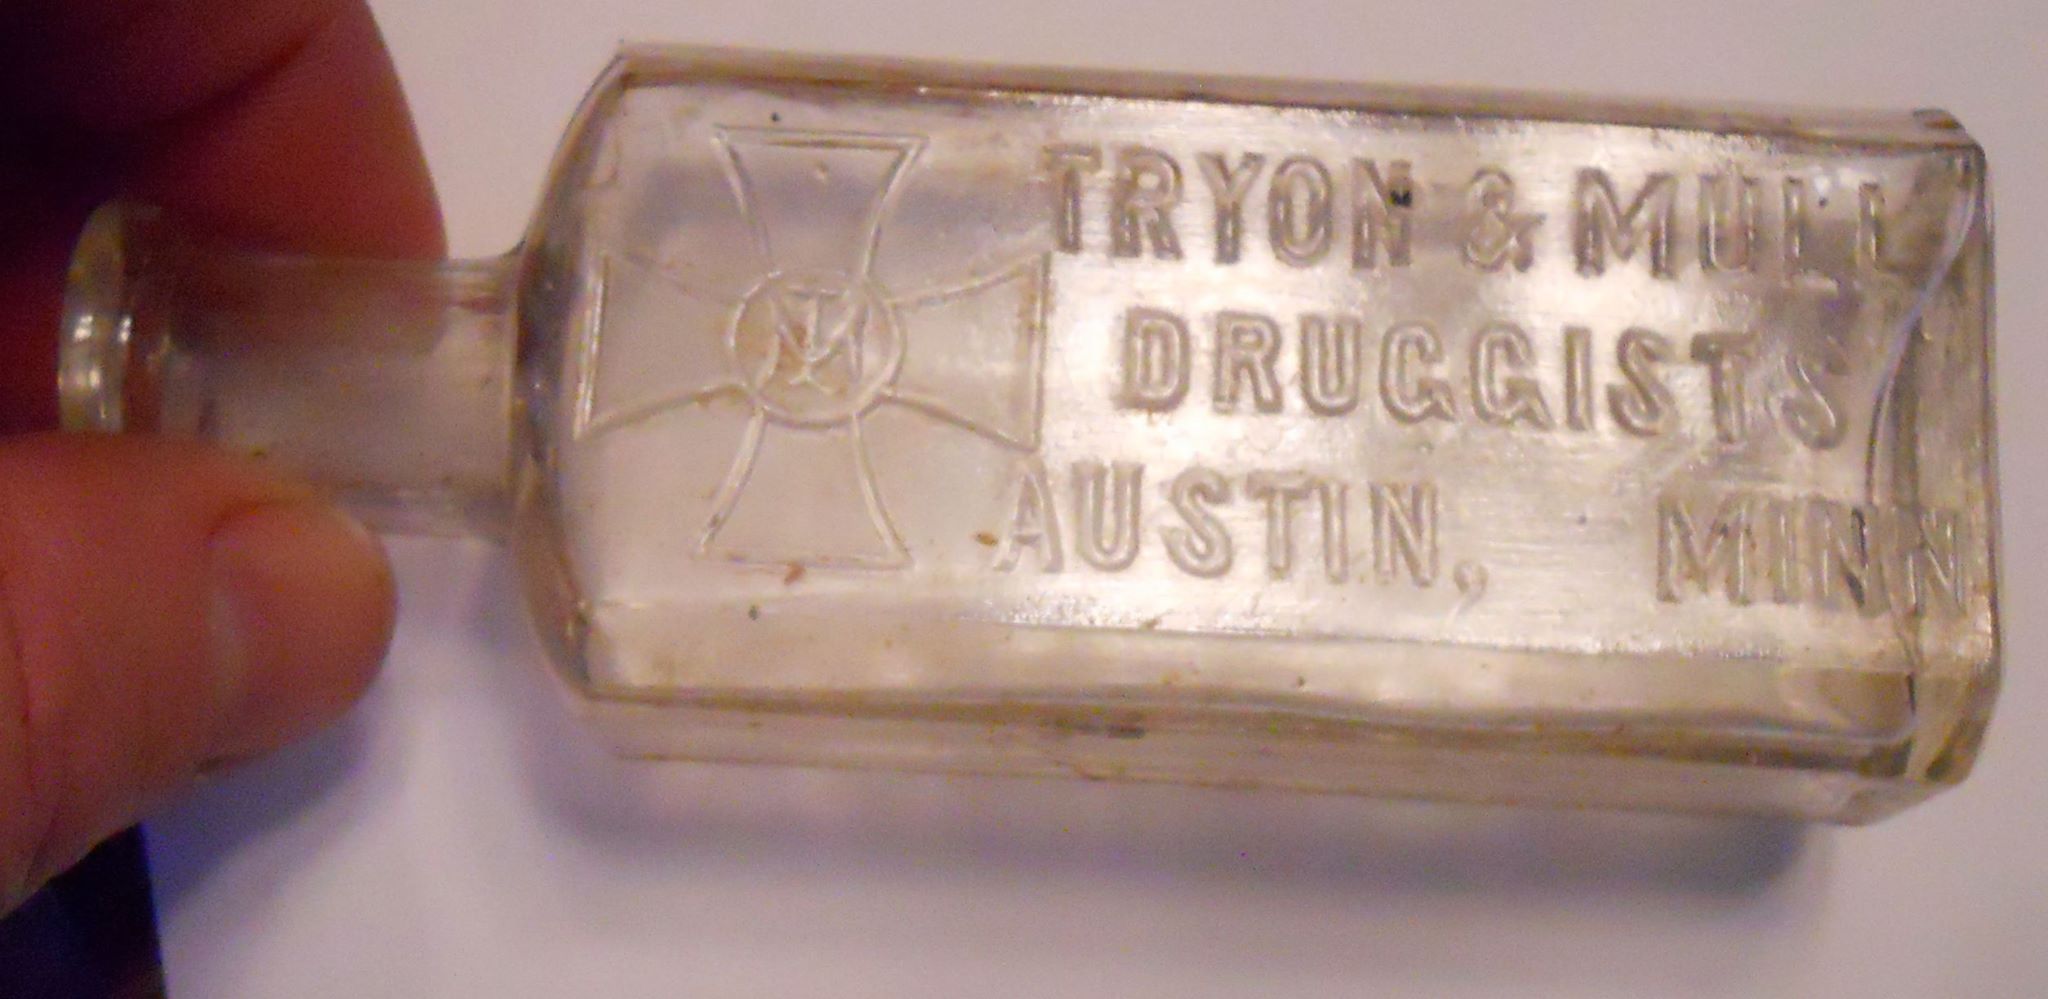 1910 Tryon & Mull Druggist bottle dug